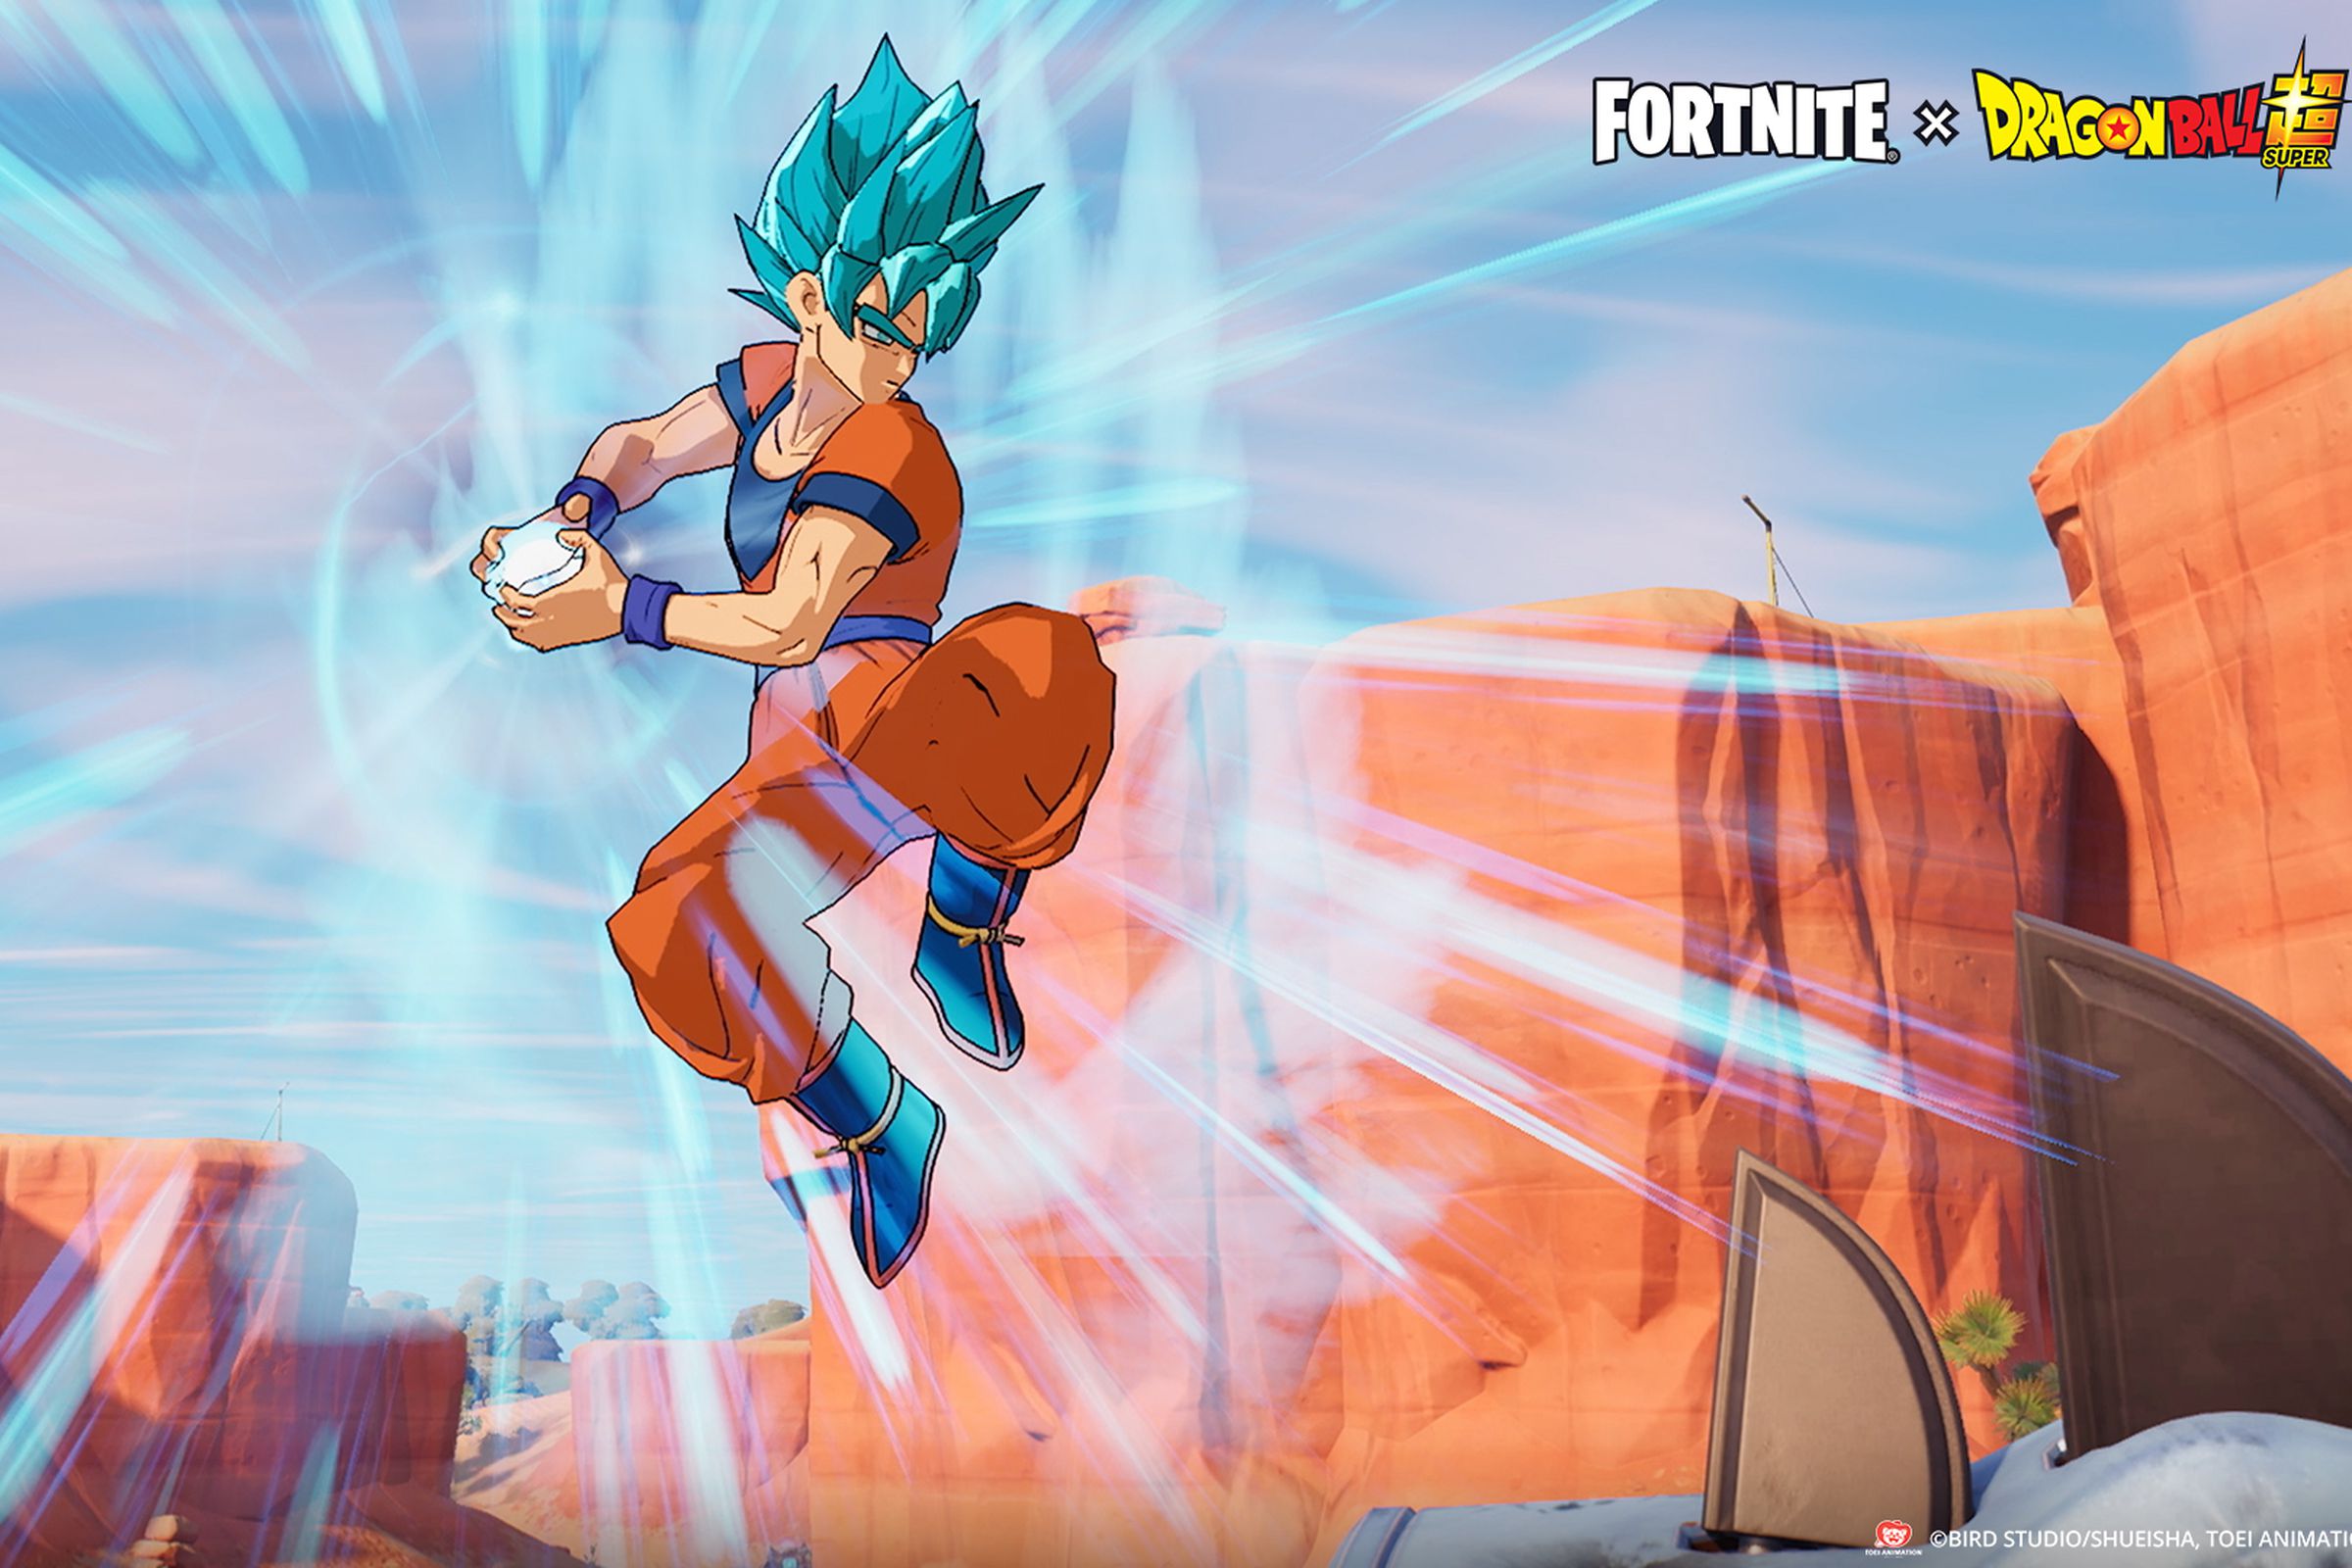 Goku charges up a Kamehameha in Fortnite.